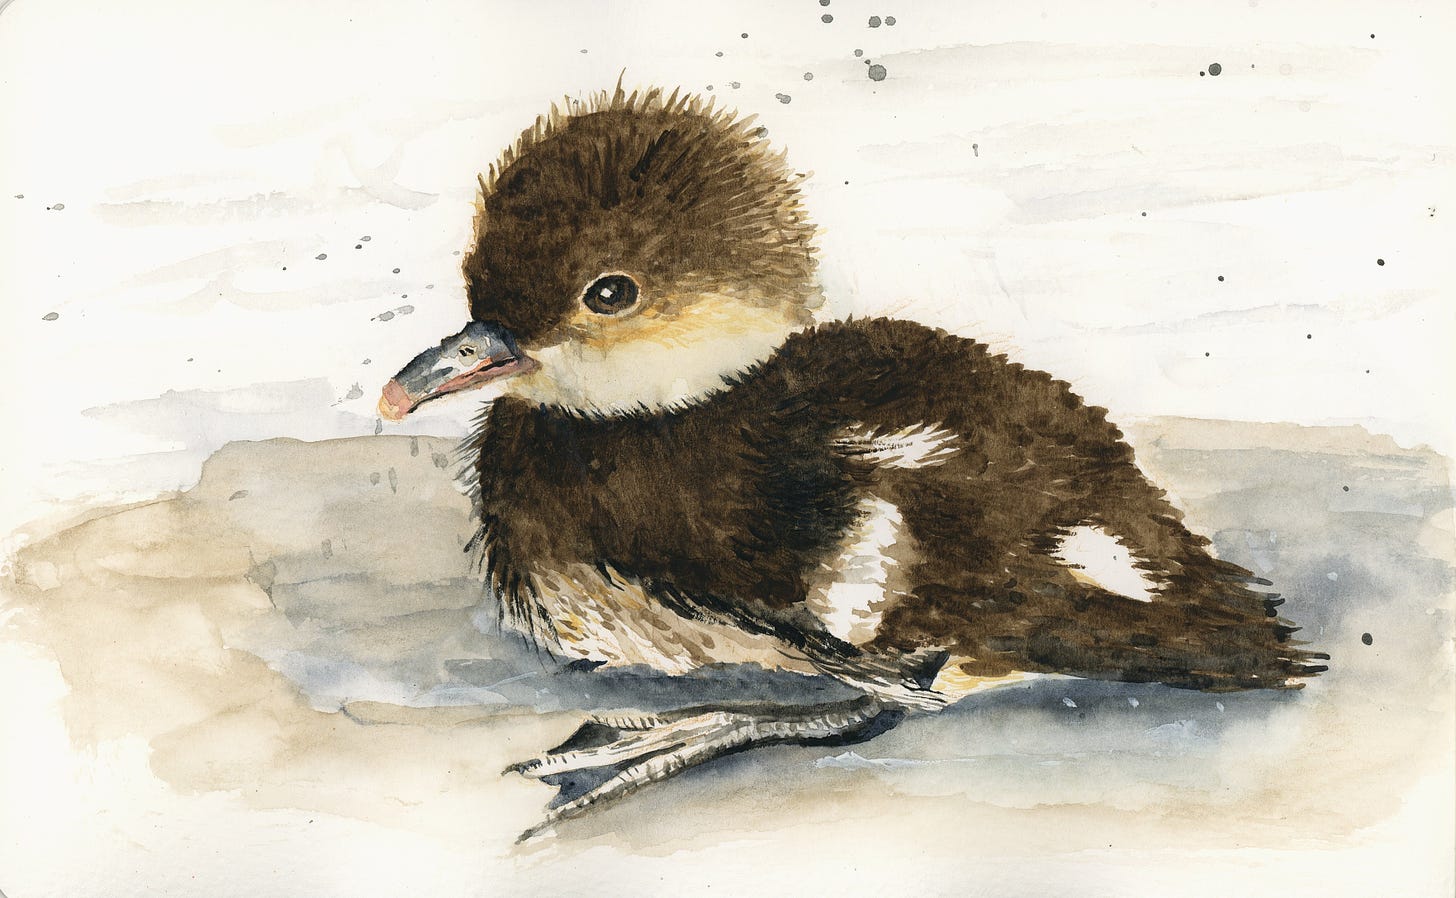 Watercolor of a baby duckling